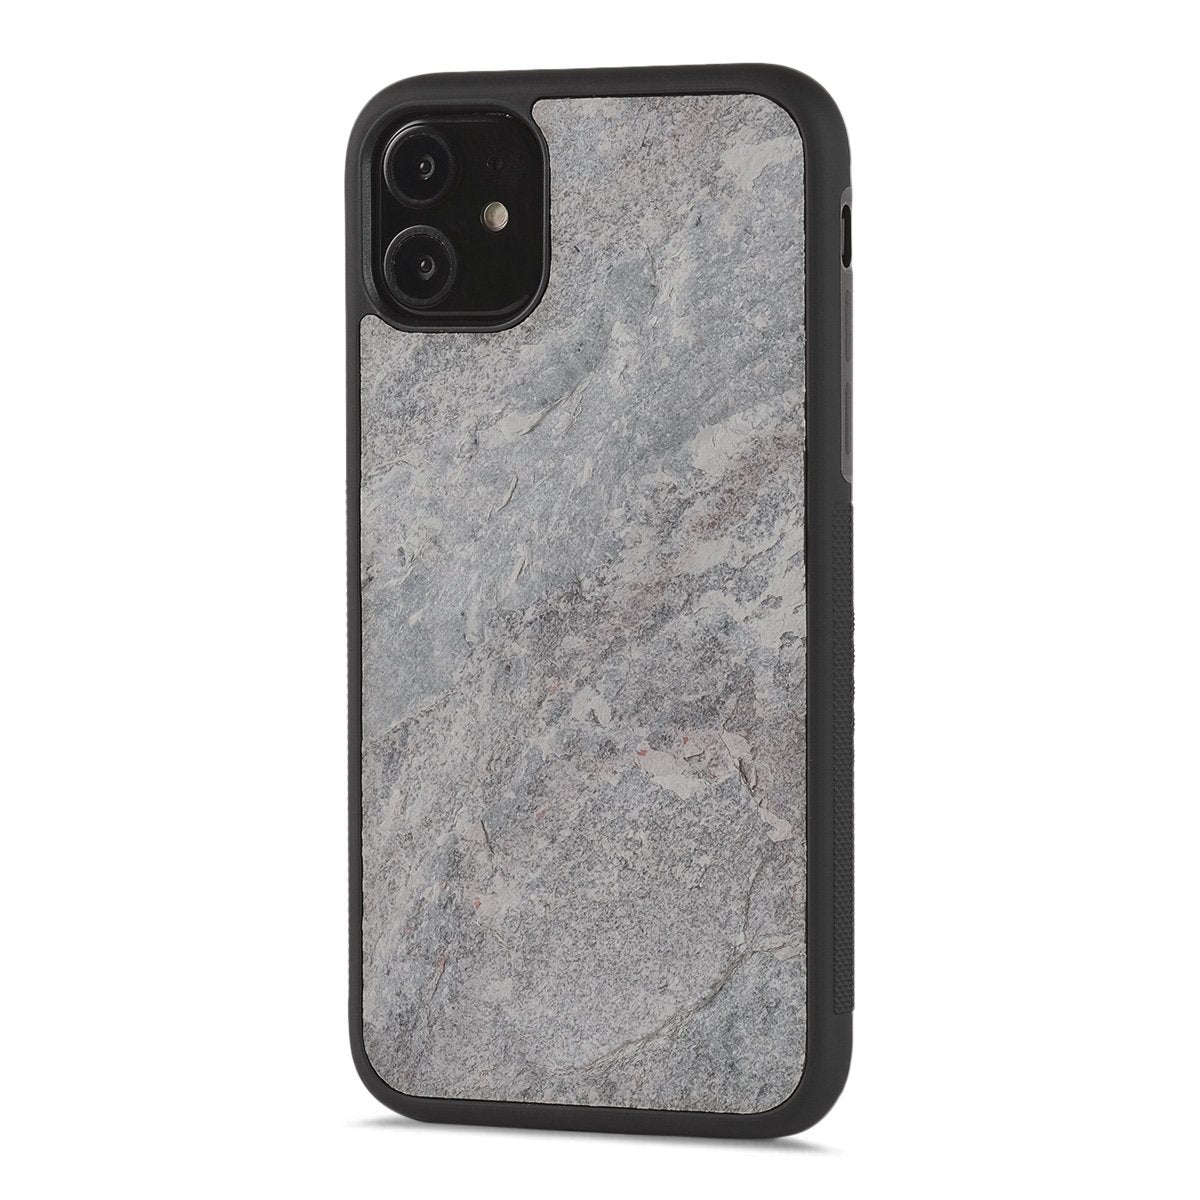 Twilight Stone Iphone 11 Pro Max Explorer Case Stone Cases Cover Up